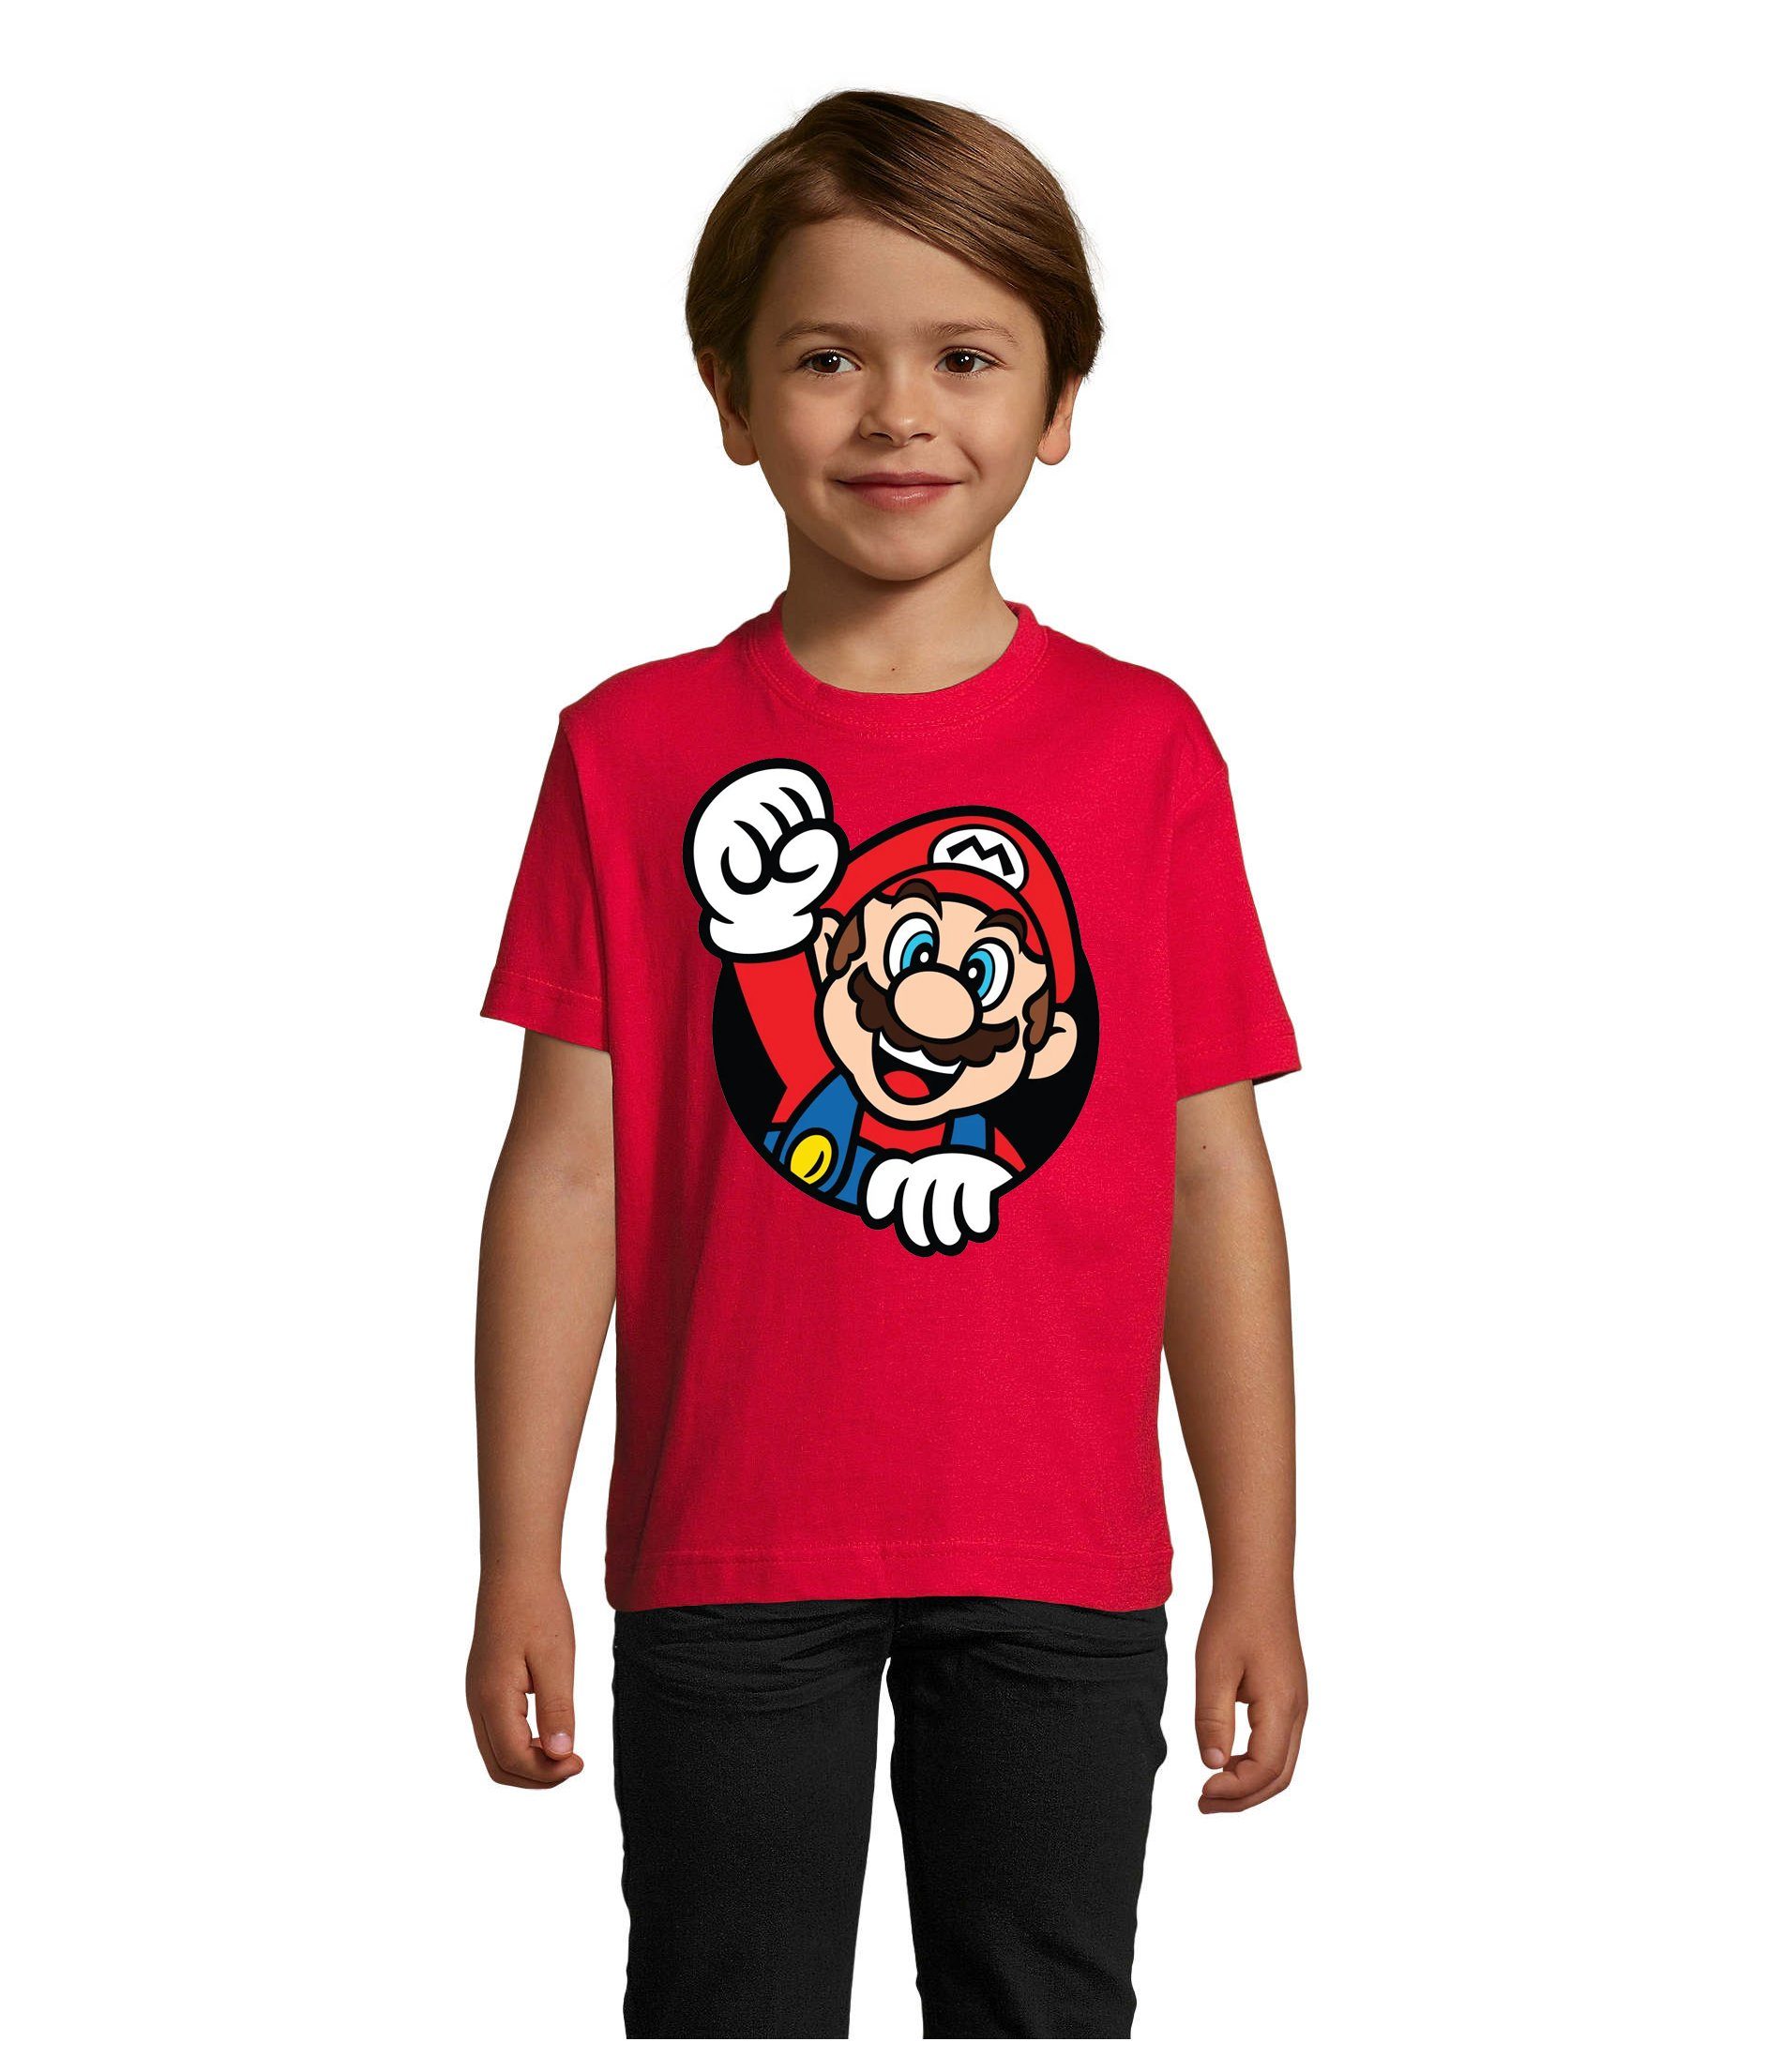 Blondie & Brownie T-Shirt Kinder Super Mario Faust Nerd Konsole Gaming Spiel Nintendo Konsole Rot